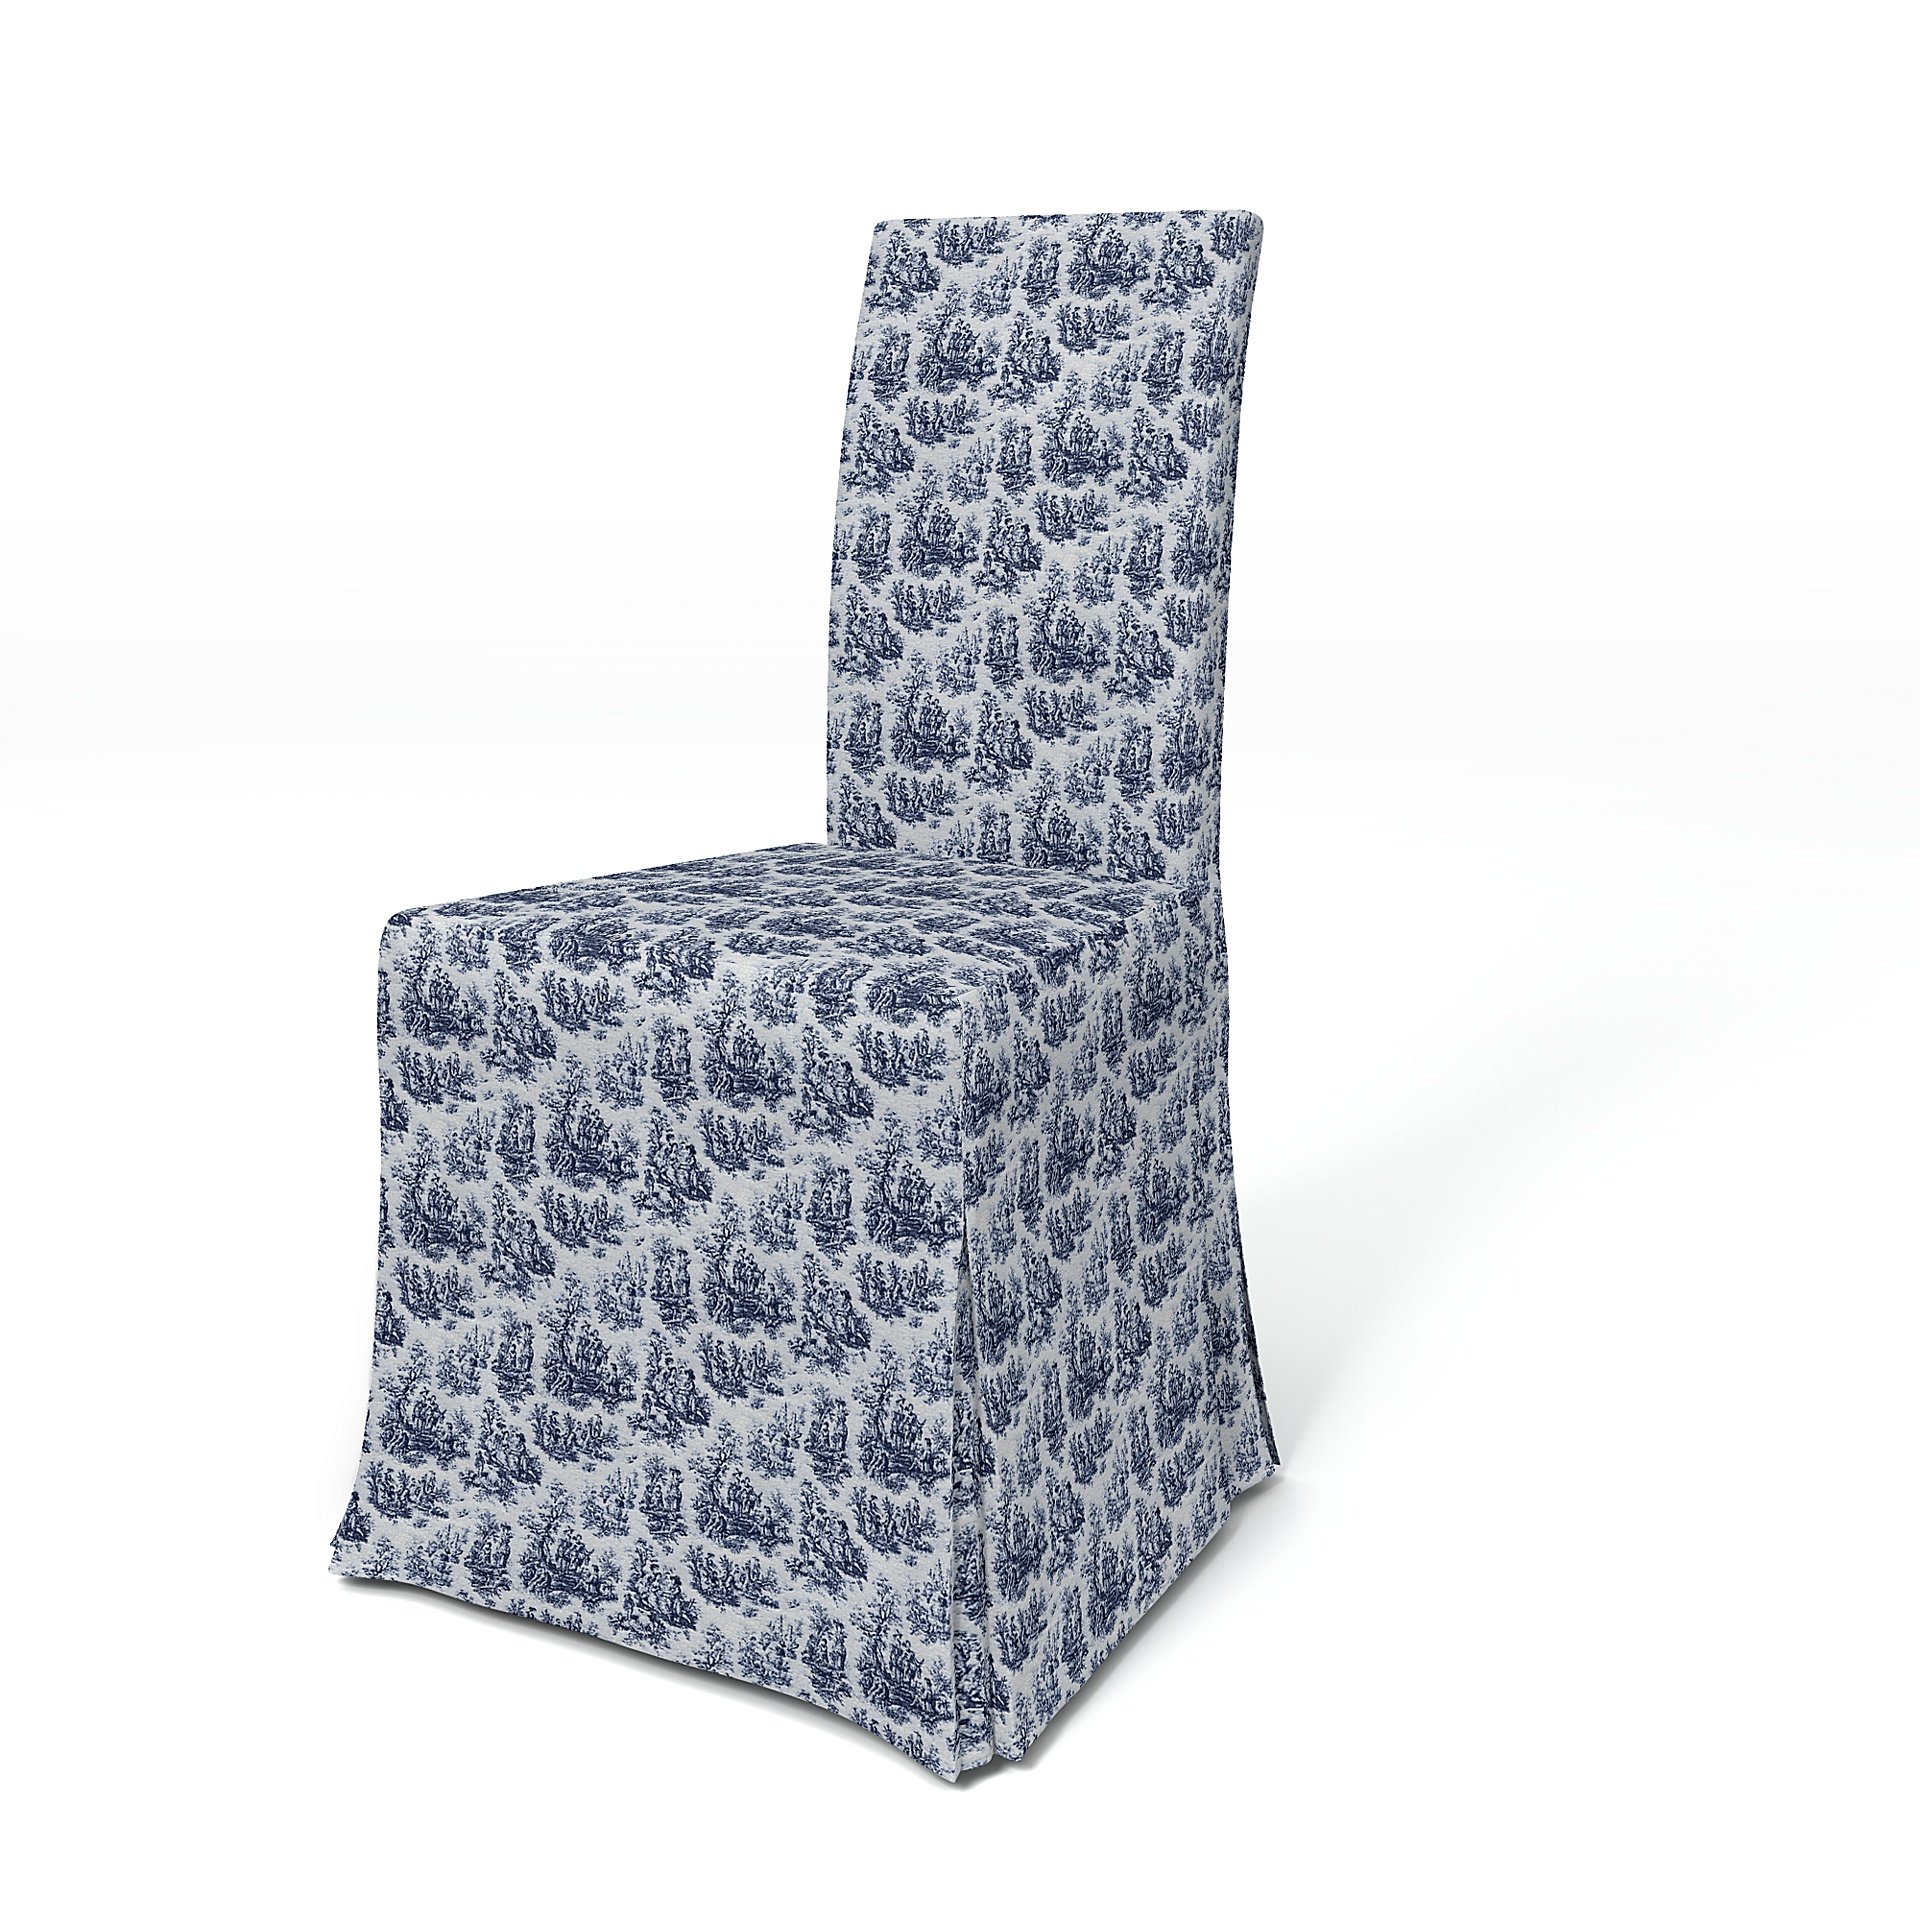 IKEA - Harry Dining Chair Cover, Dark Blue, Boucle & Texture - Bemz